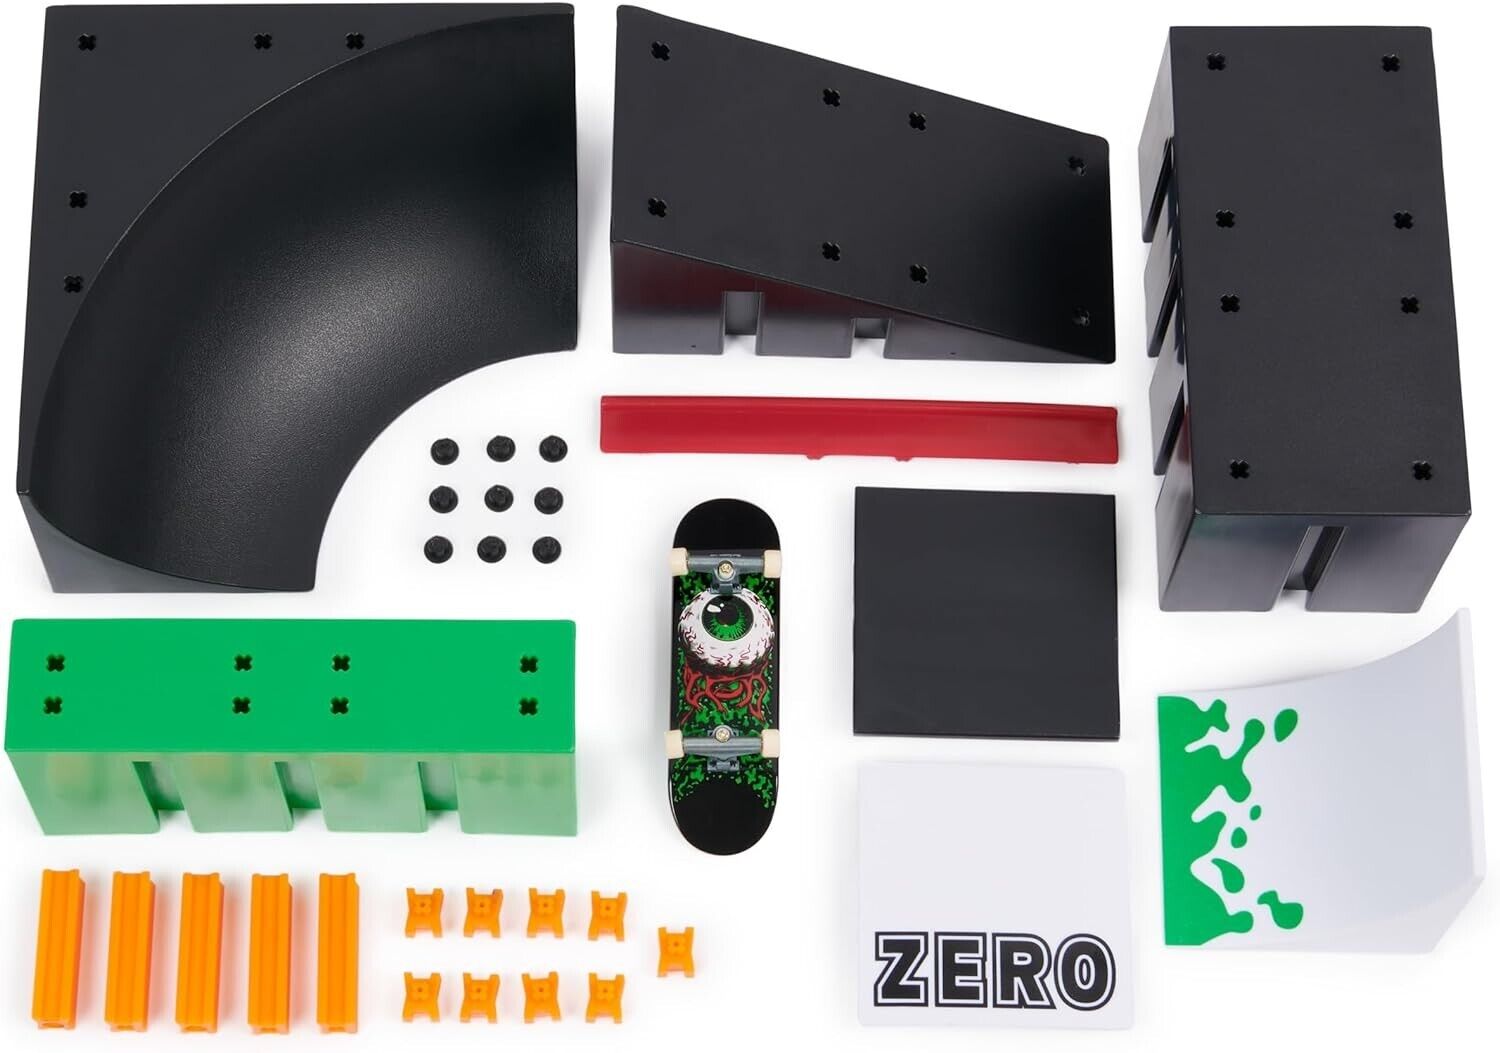 Tech Deck 6069424 Toy Skateboard Playset X Connect ParkCreator Ramp 2